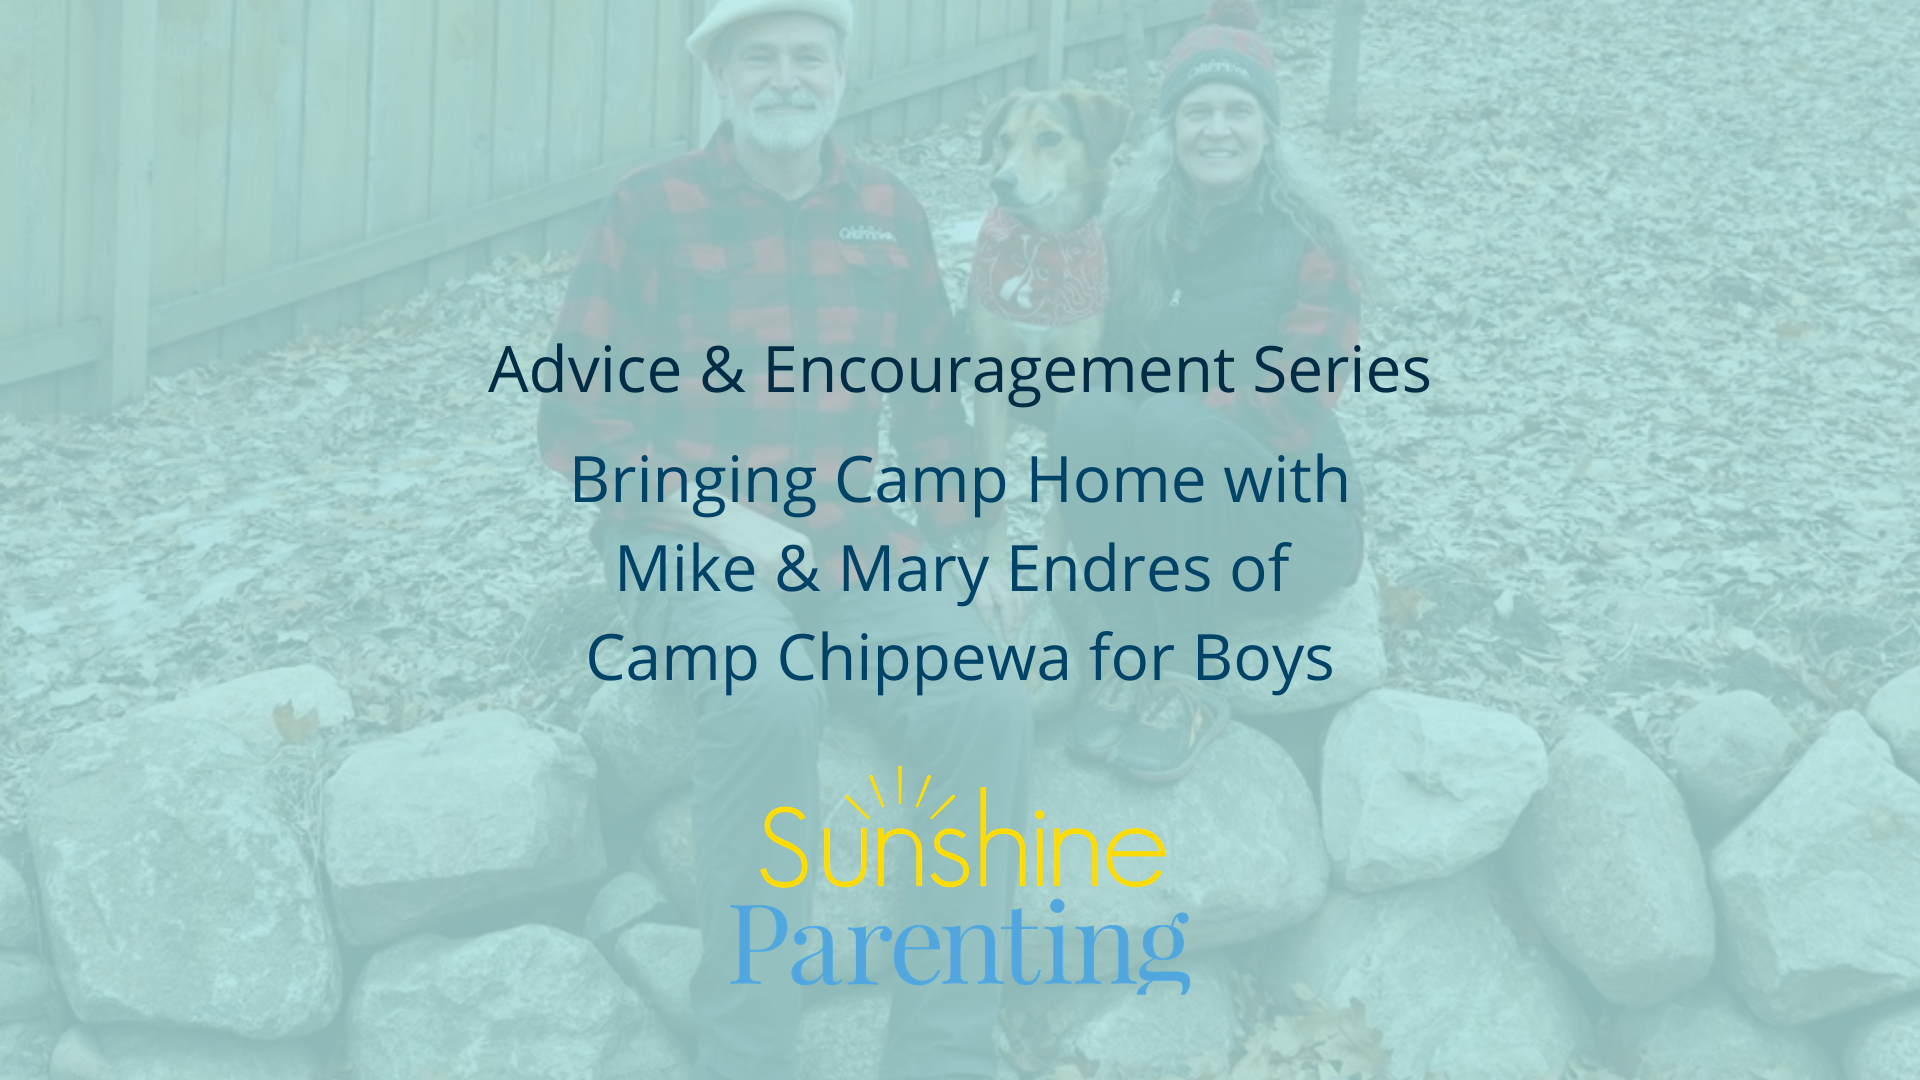 Camp Chippewa for Boys